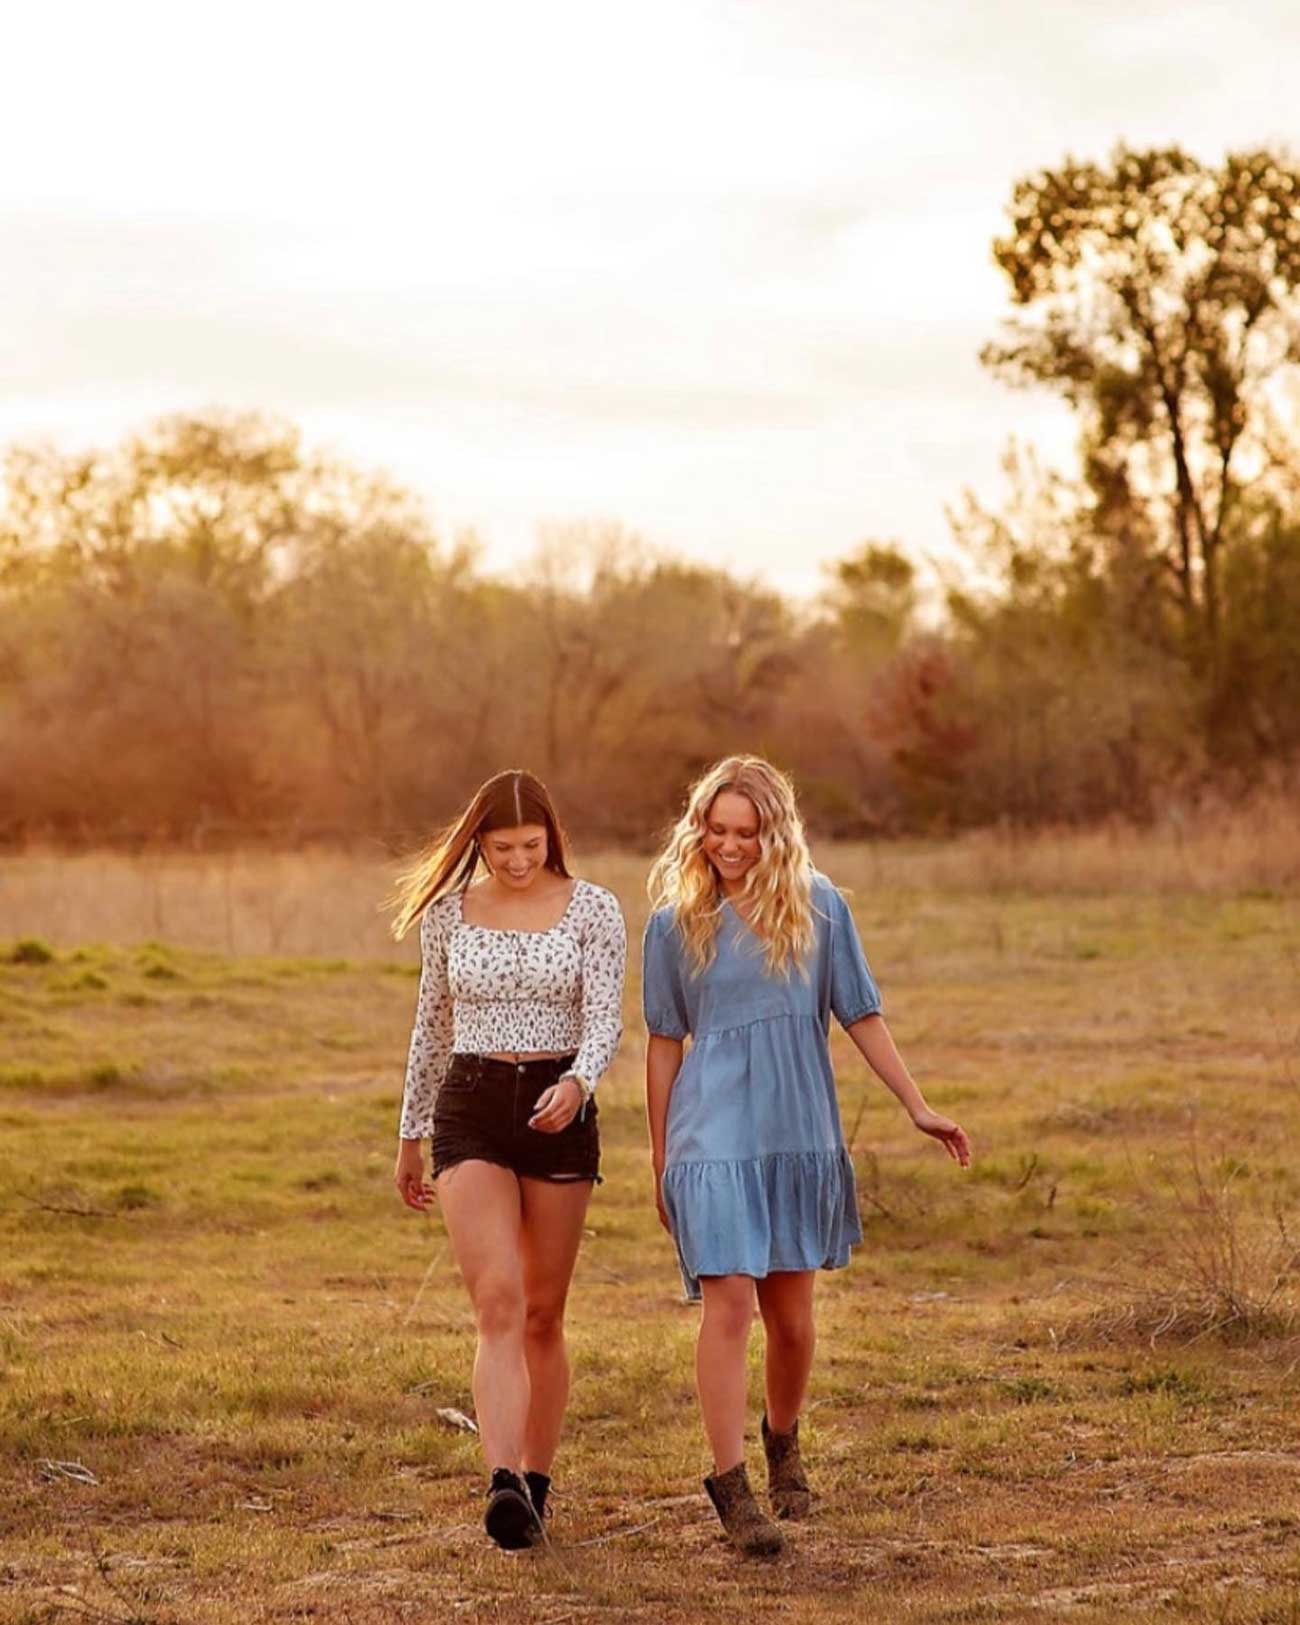 Baylee Sanderson walks with her friend Hailey at sunset